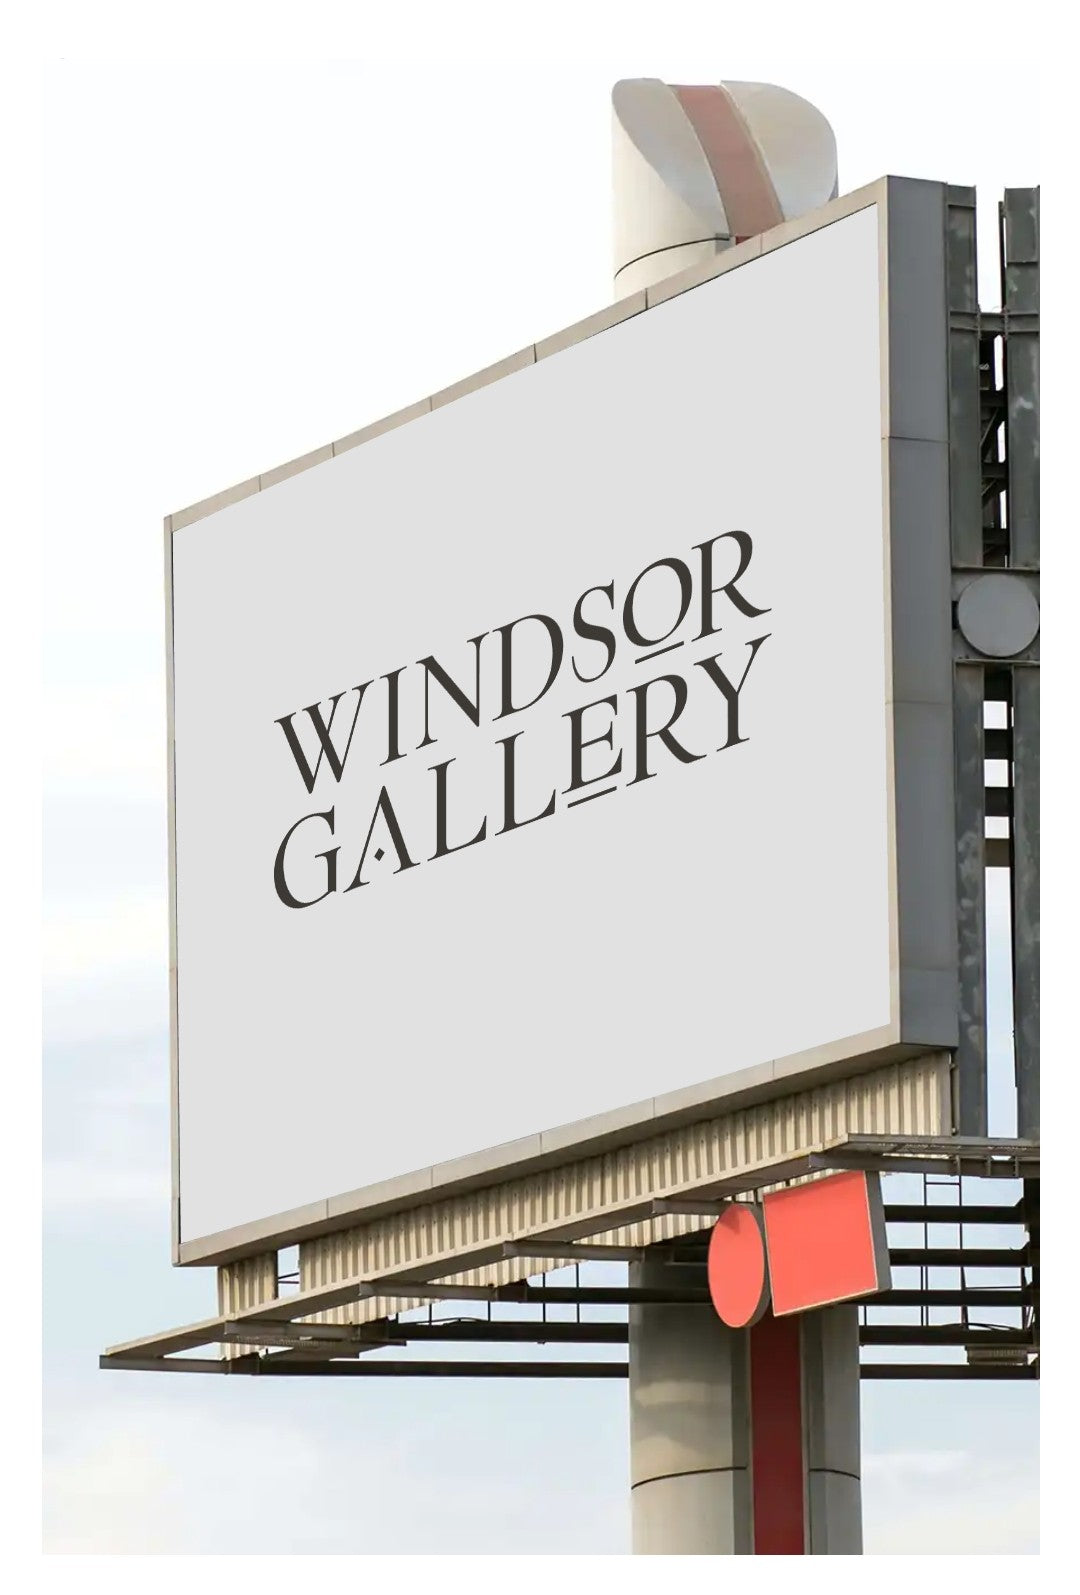 Billboard showing Windsor Gallery logo